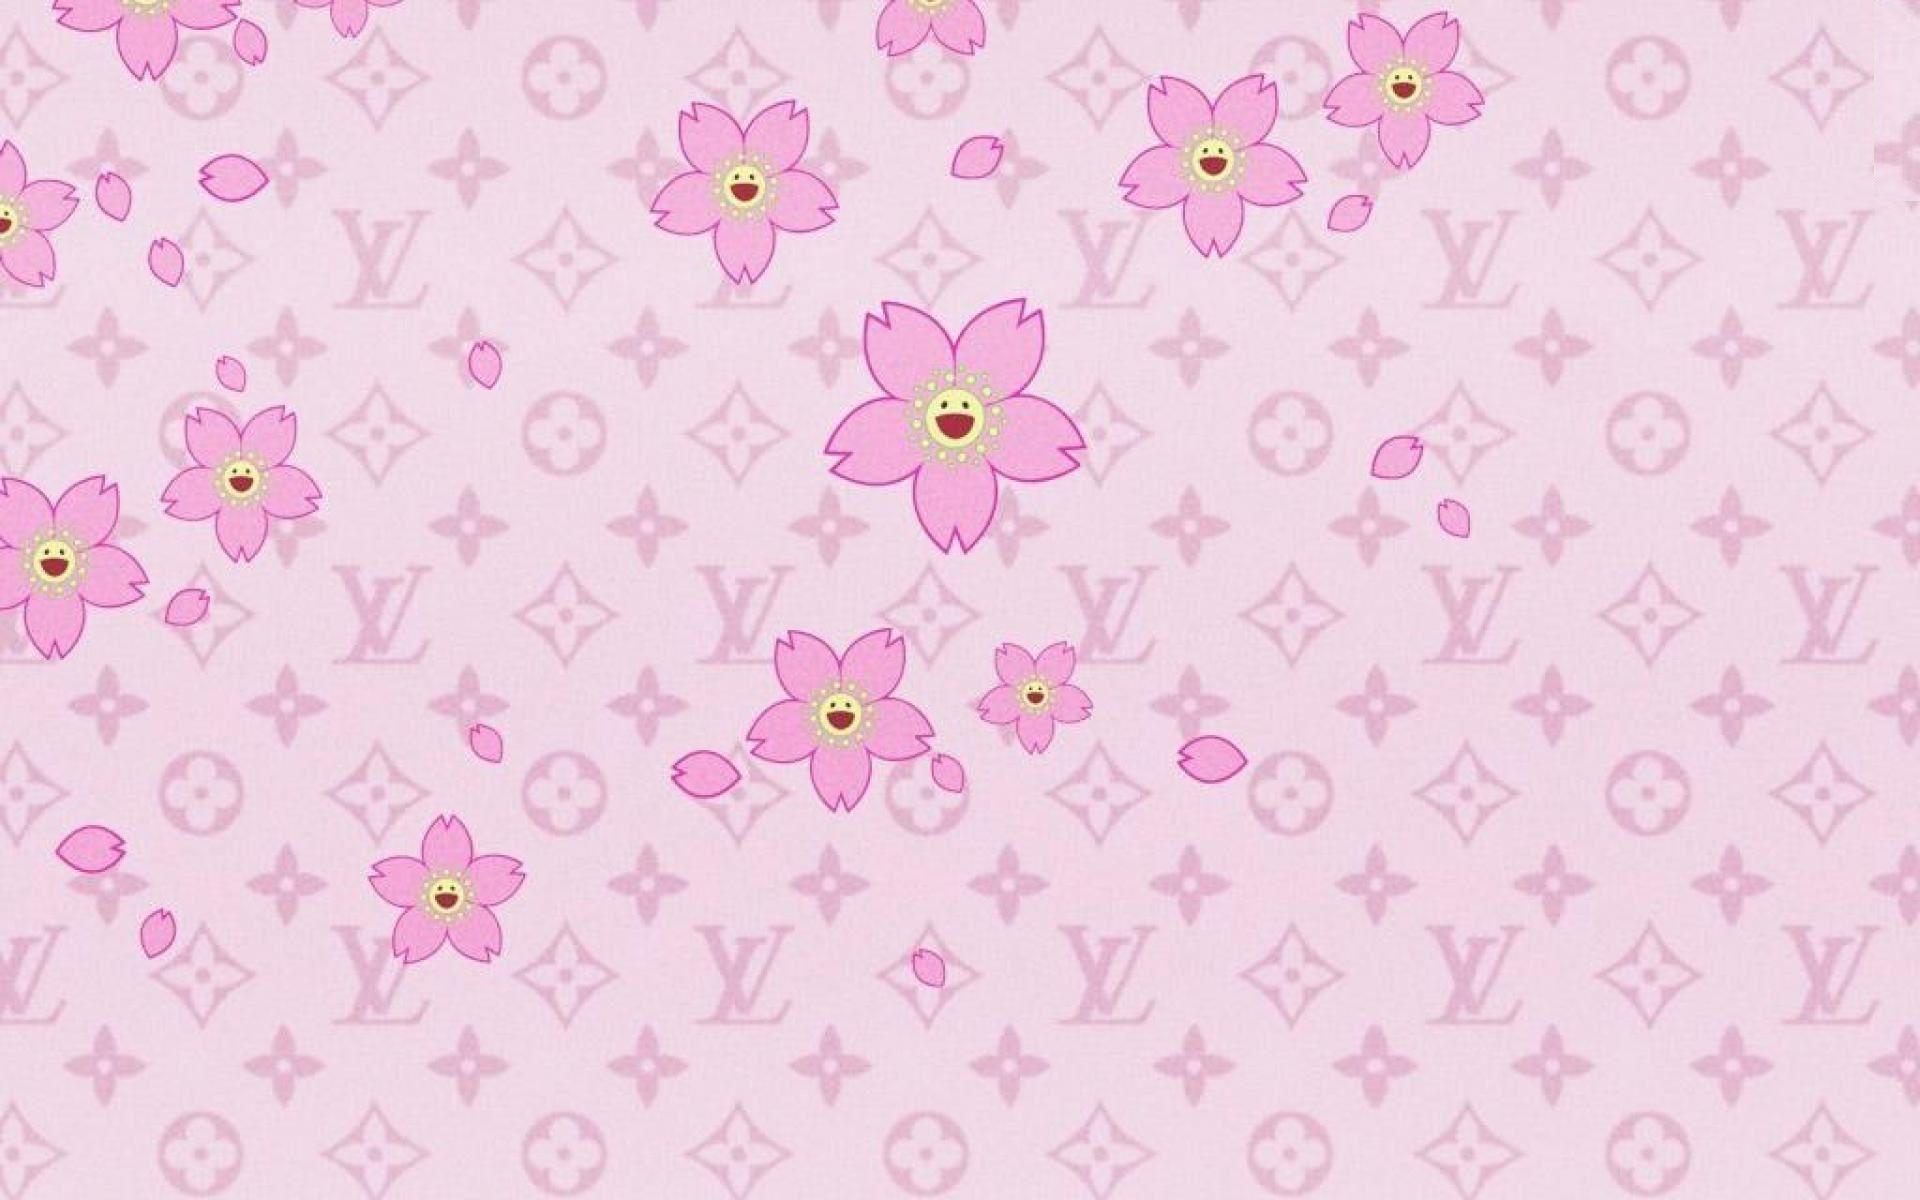 Louis Vuitton Flower Logo, HD Png Download - 800x600(#6826010) - PngFind